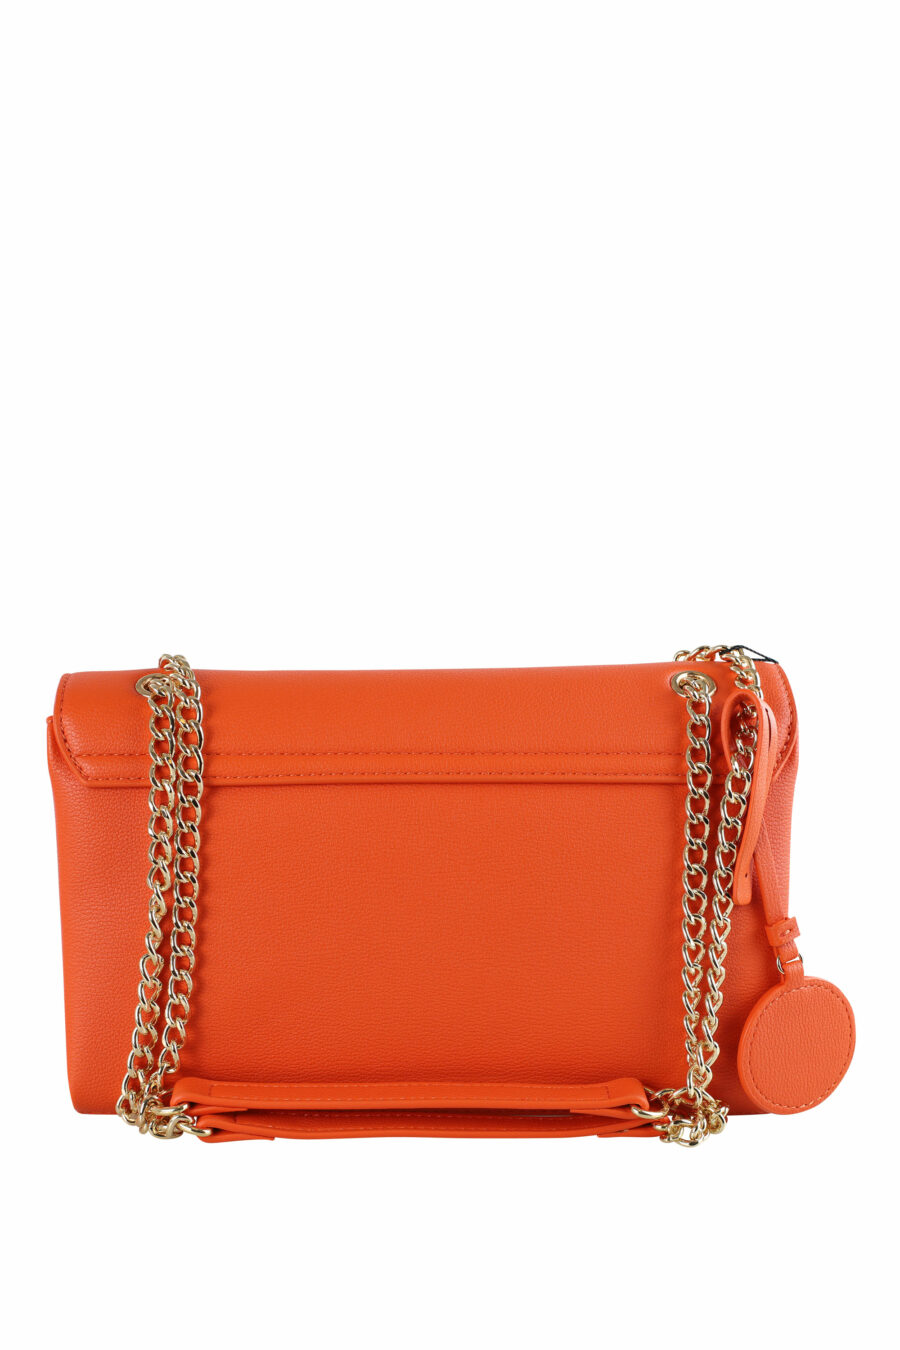 Orange shoulder bag with chain and lettering logo - IMG 3656